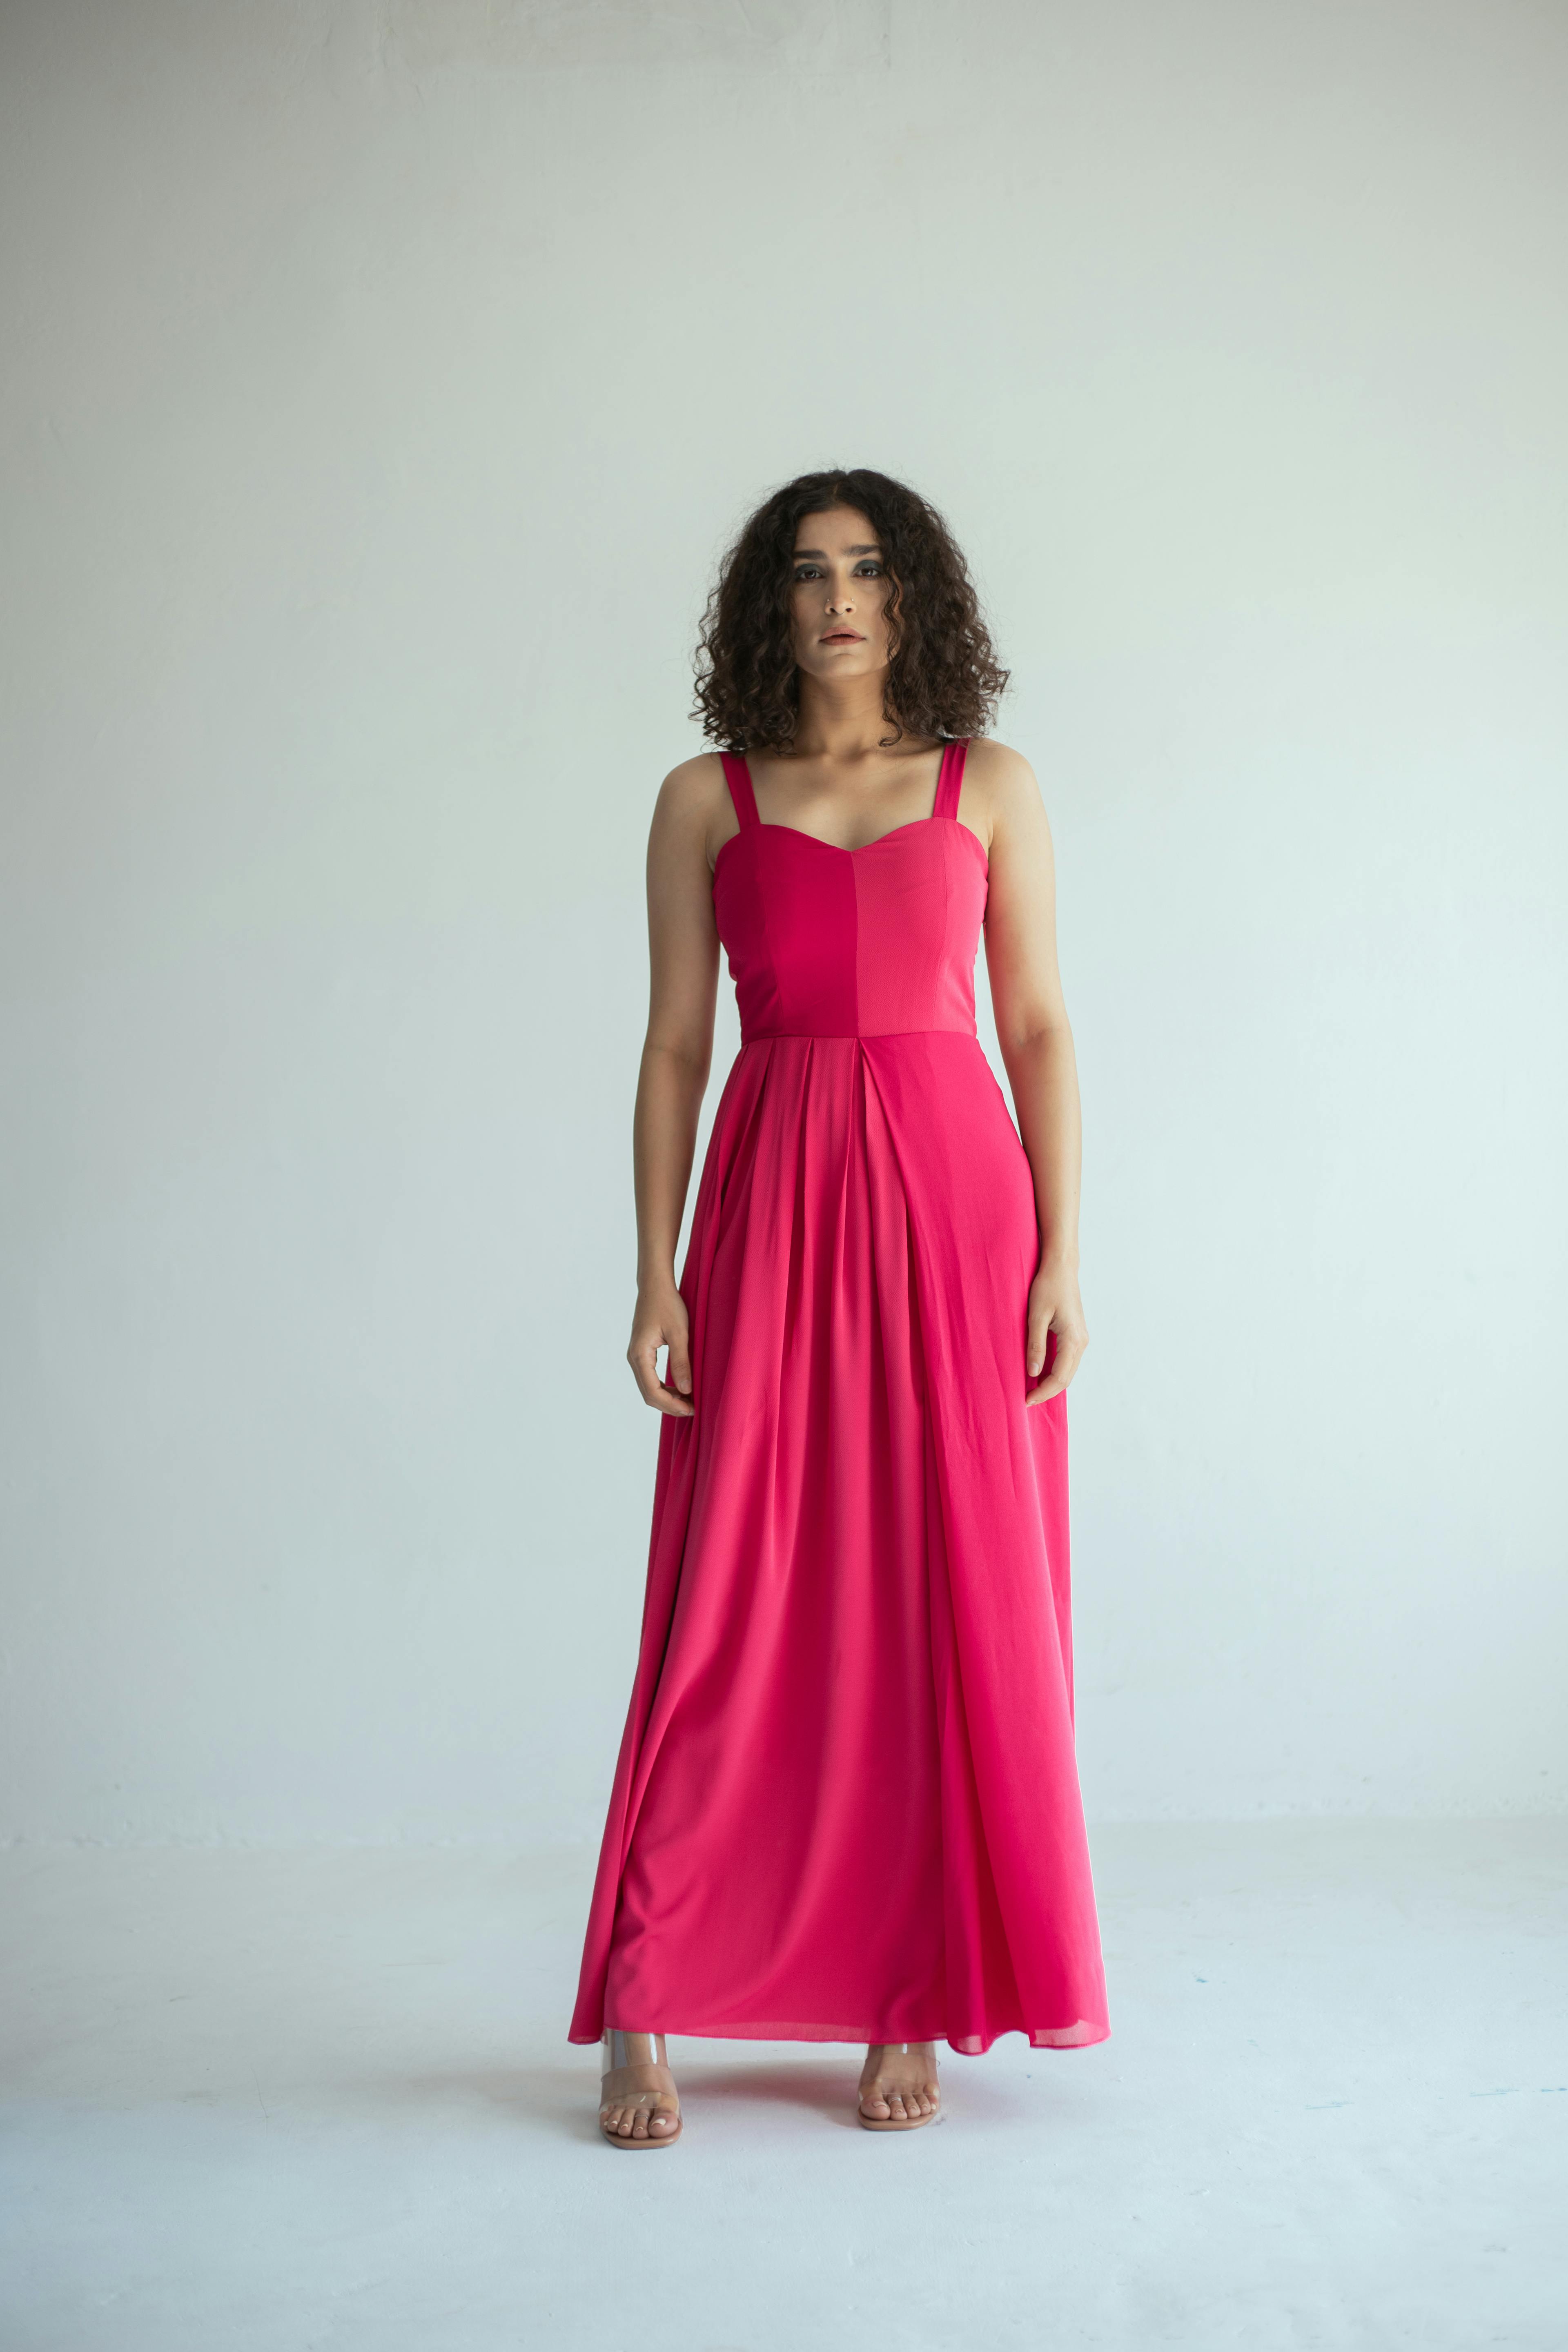 Dual Toned Pink Maxi Dress , a product by Kritika Madan